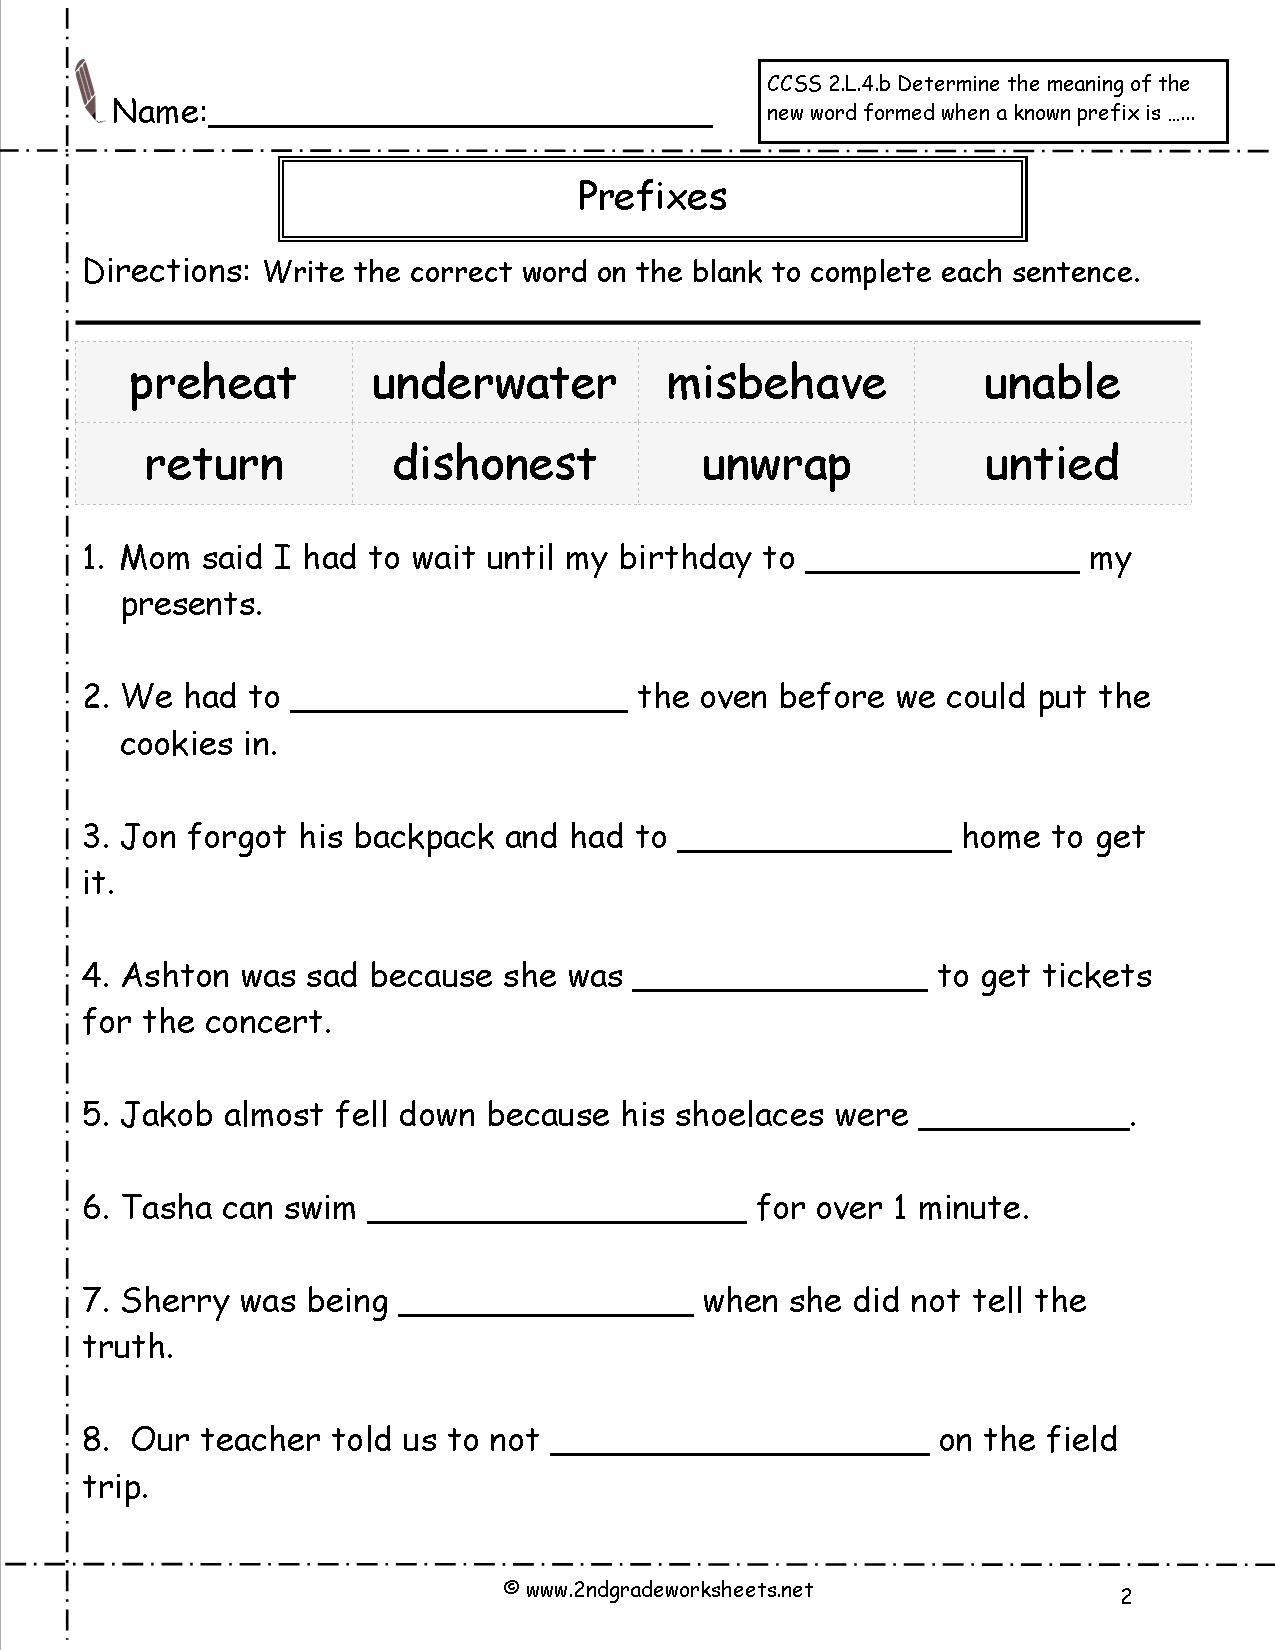 Suffix Worksheets for 4th Grade Second Grade Prefixes Worksheets